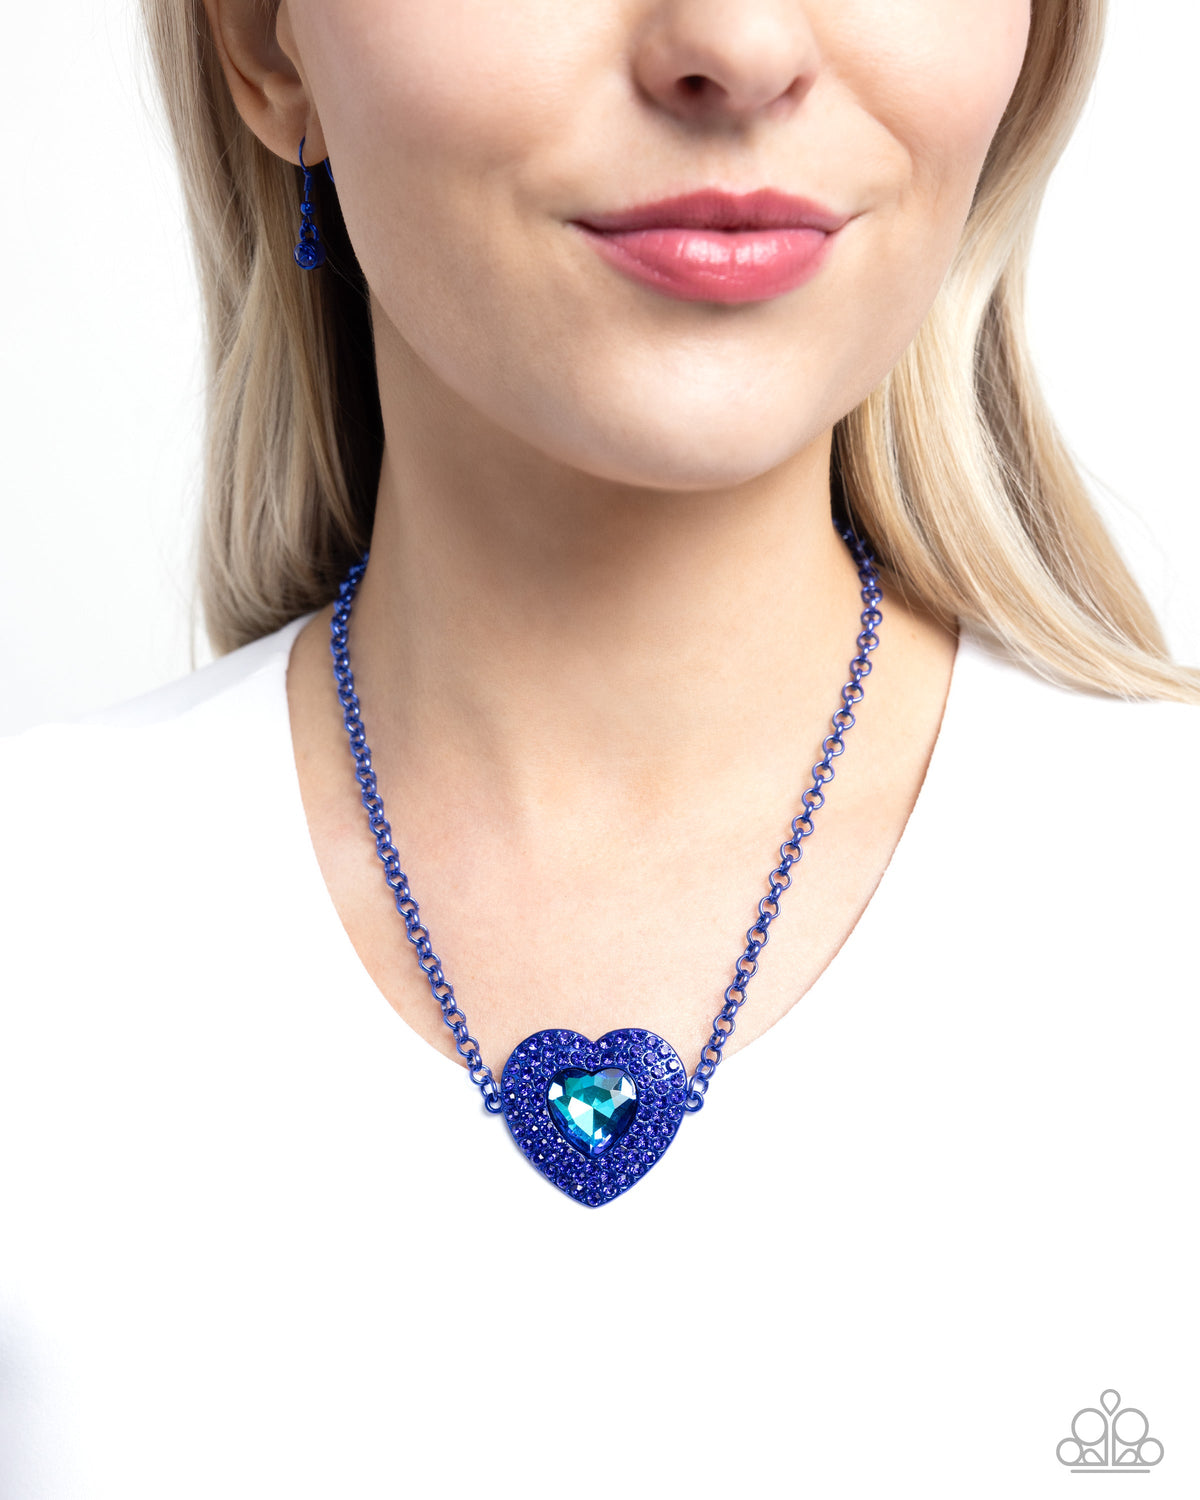 Locket Leisure Blue Rhinestone Heart Necklace - Paparazzi Accessories-on model - CarasShop.com - $5 Jewelry by Cara Jewels